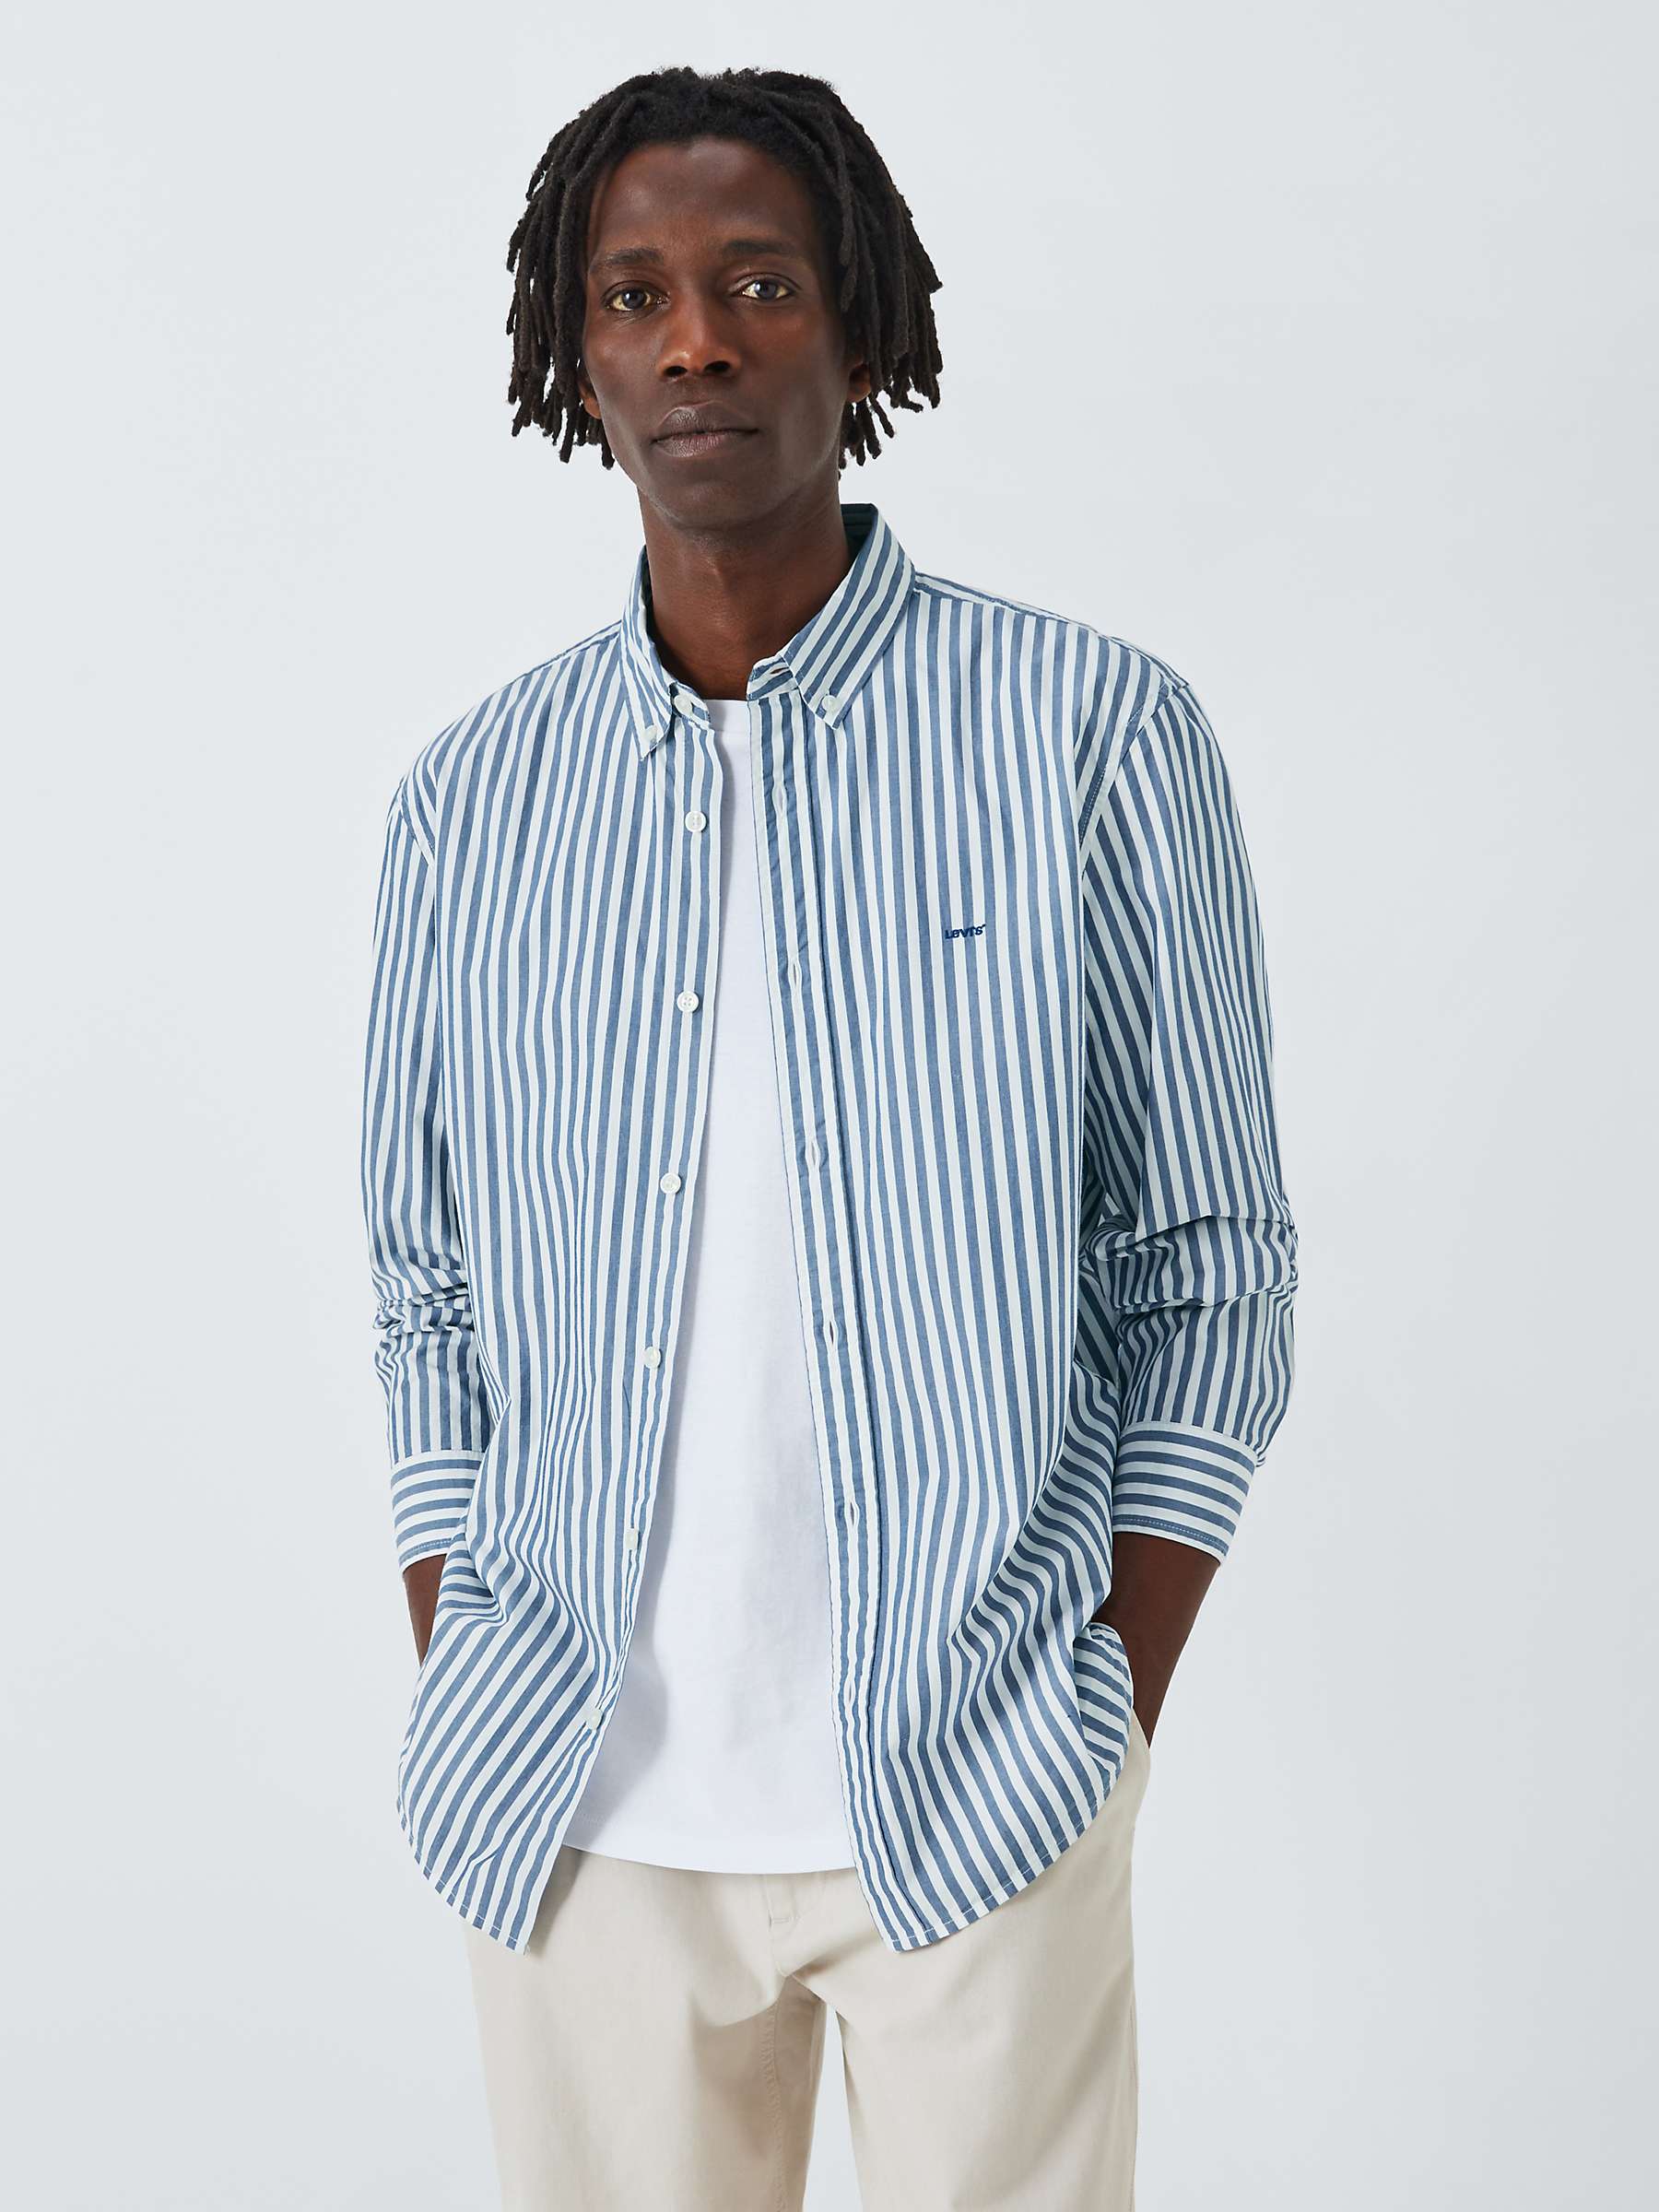 Buy Levi's Authentic Striped Cotton Shirt, Blue/White Online at johnlewis.com